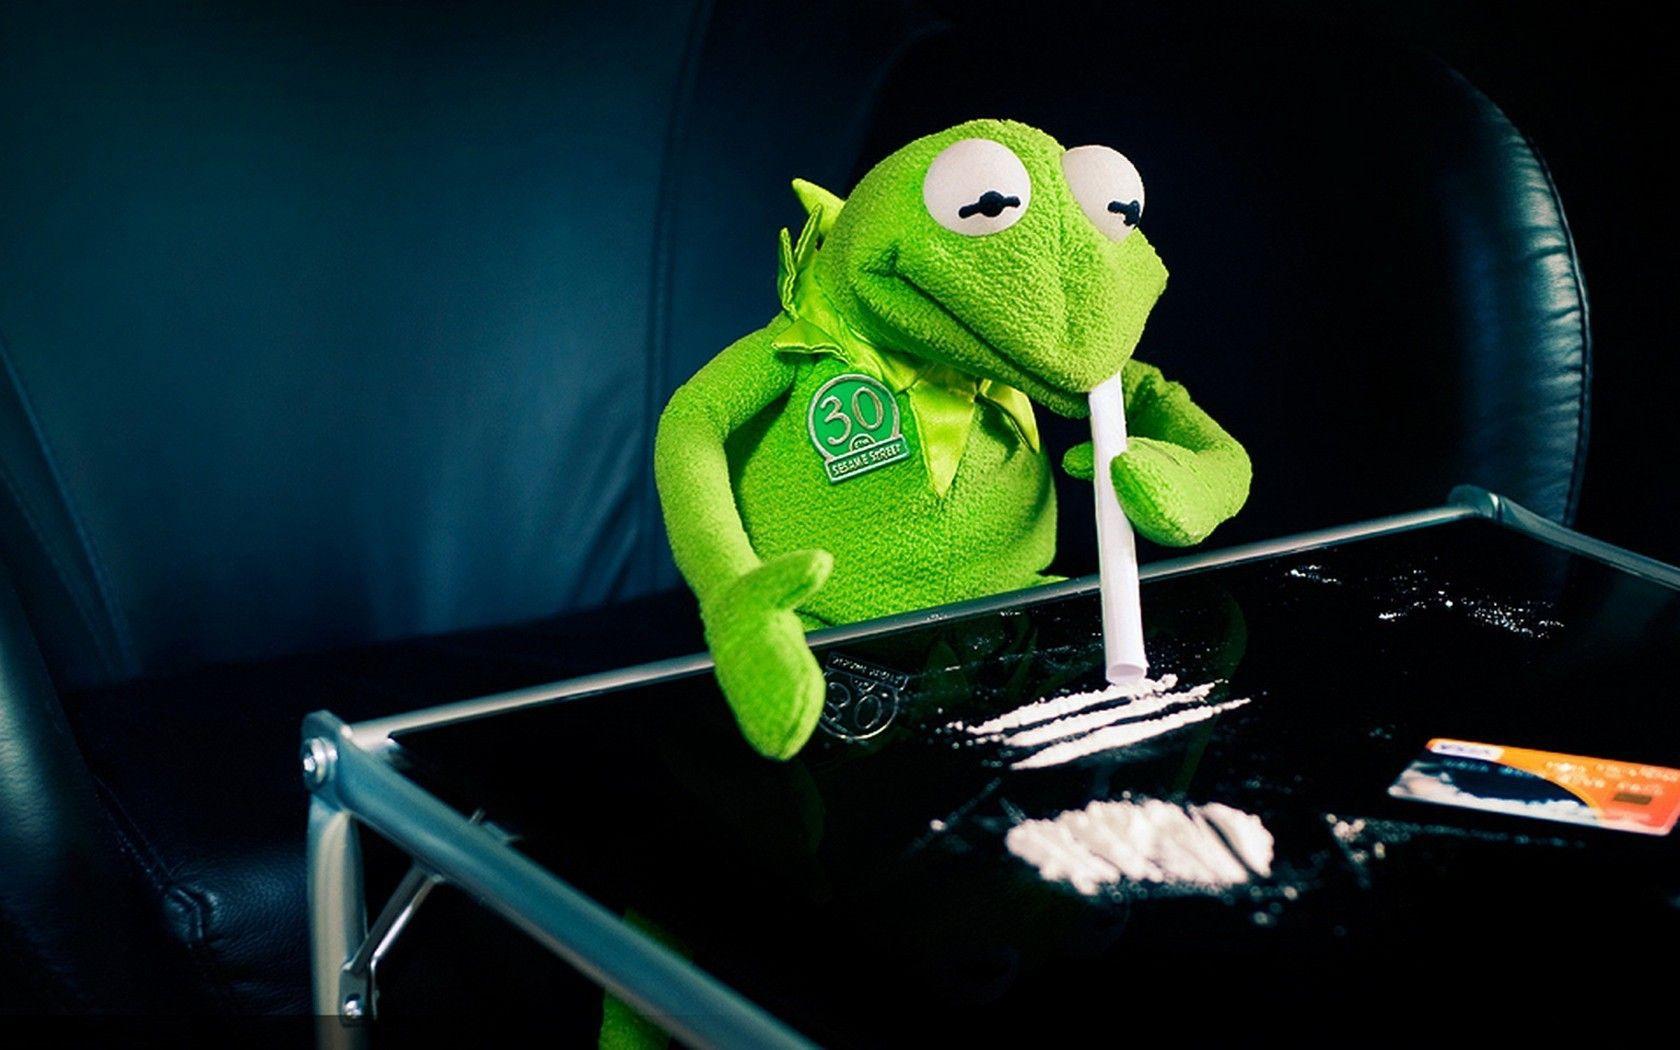 Kermit the frog cocaine 1680x1050 wallpaper free desktop background